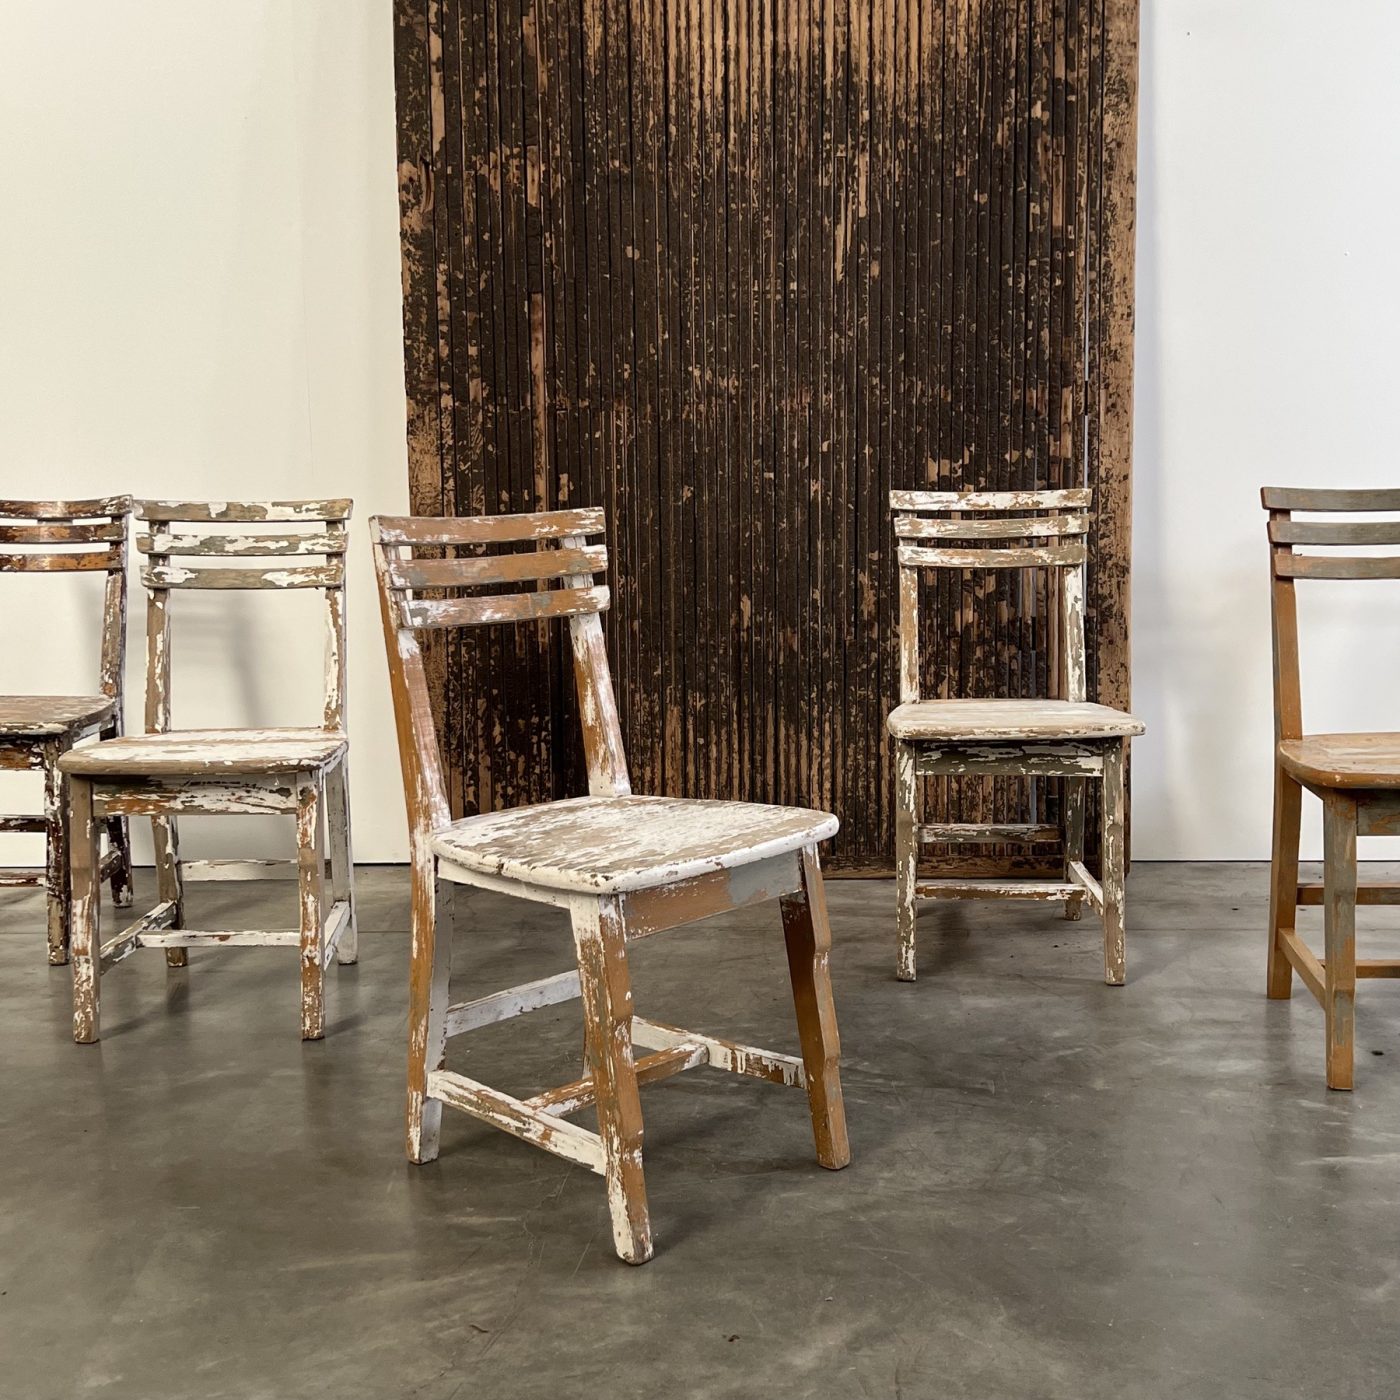 objet-vagabond-painted-chairs0003